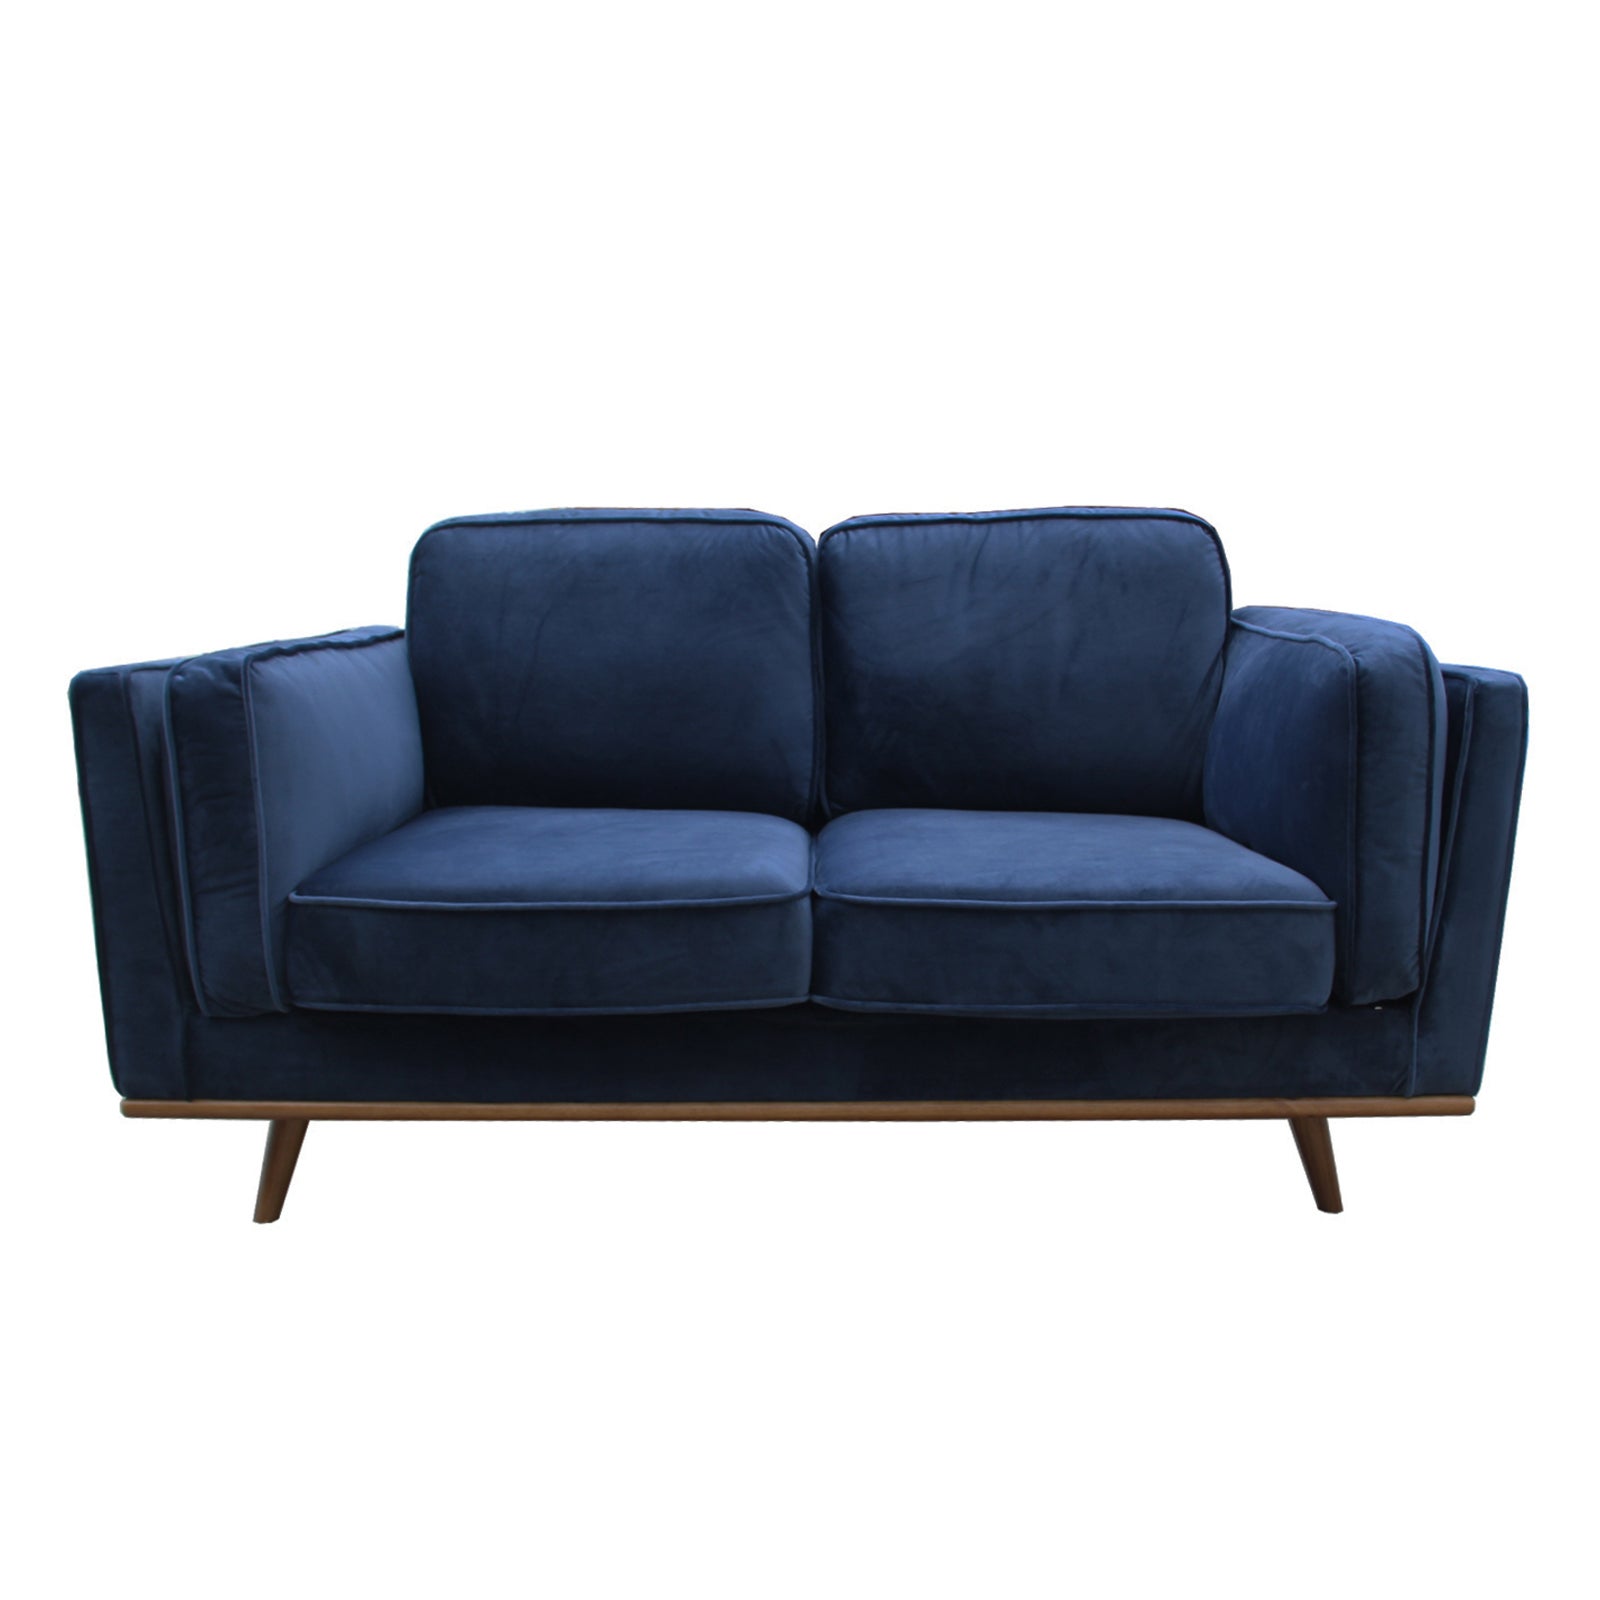 York 2 Seater Fabric Armchair Sofa Modern Lounge in Blue Colour